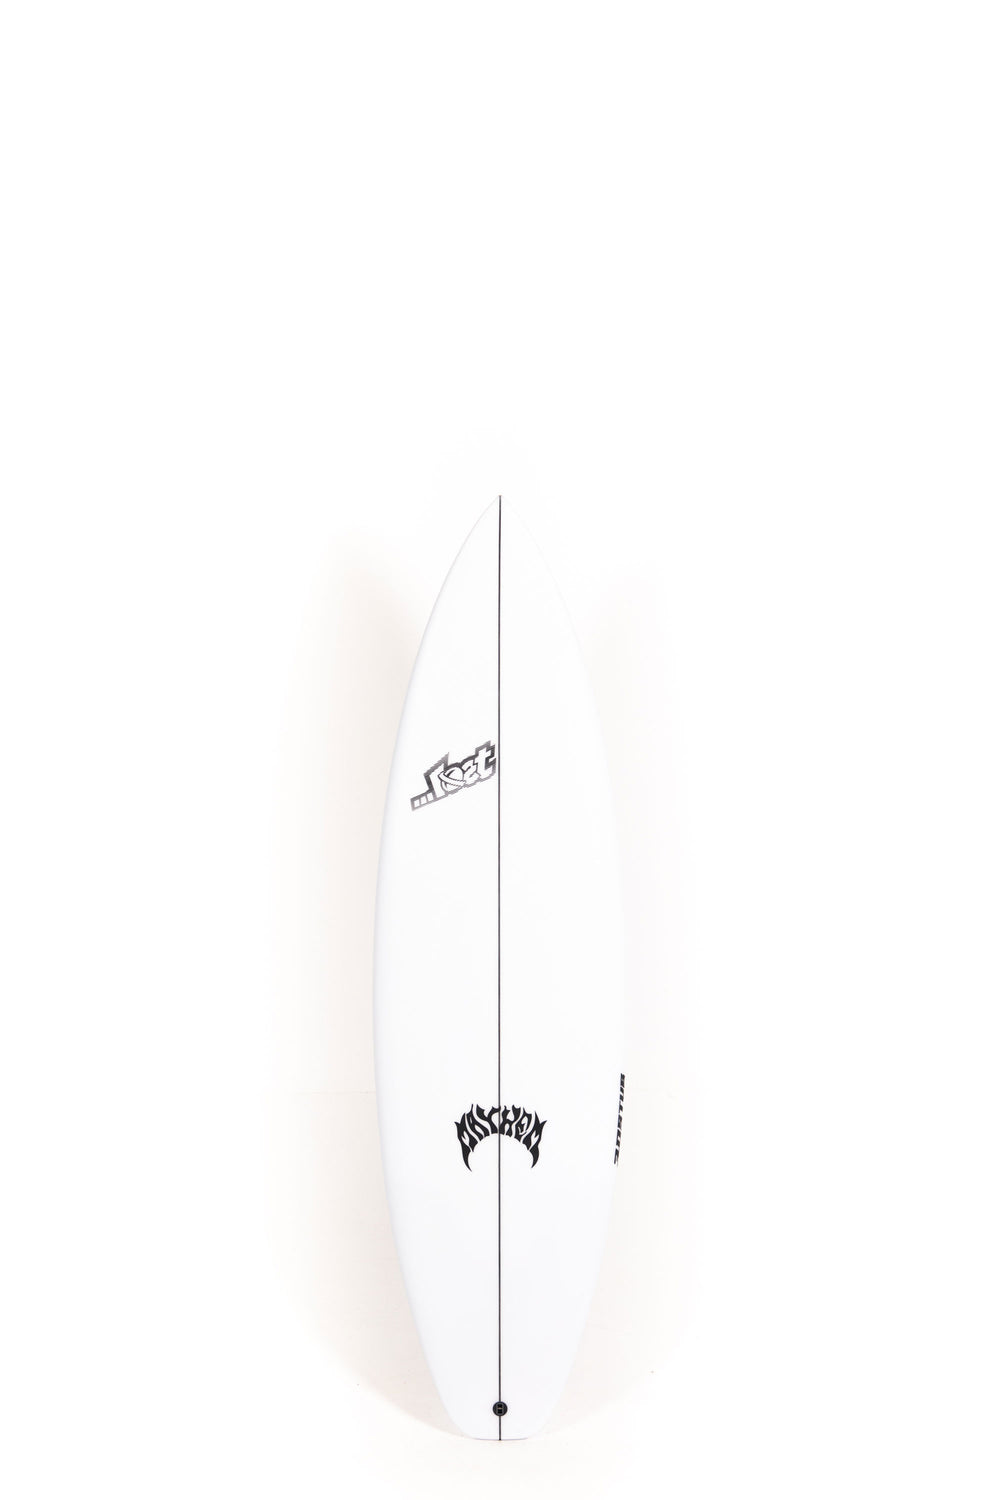 Pukas Surf Shop - Lost Surfboard - 3.0_STUB DRIVER by Matt Biolos - 5’9” x 19